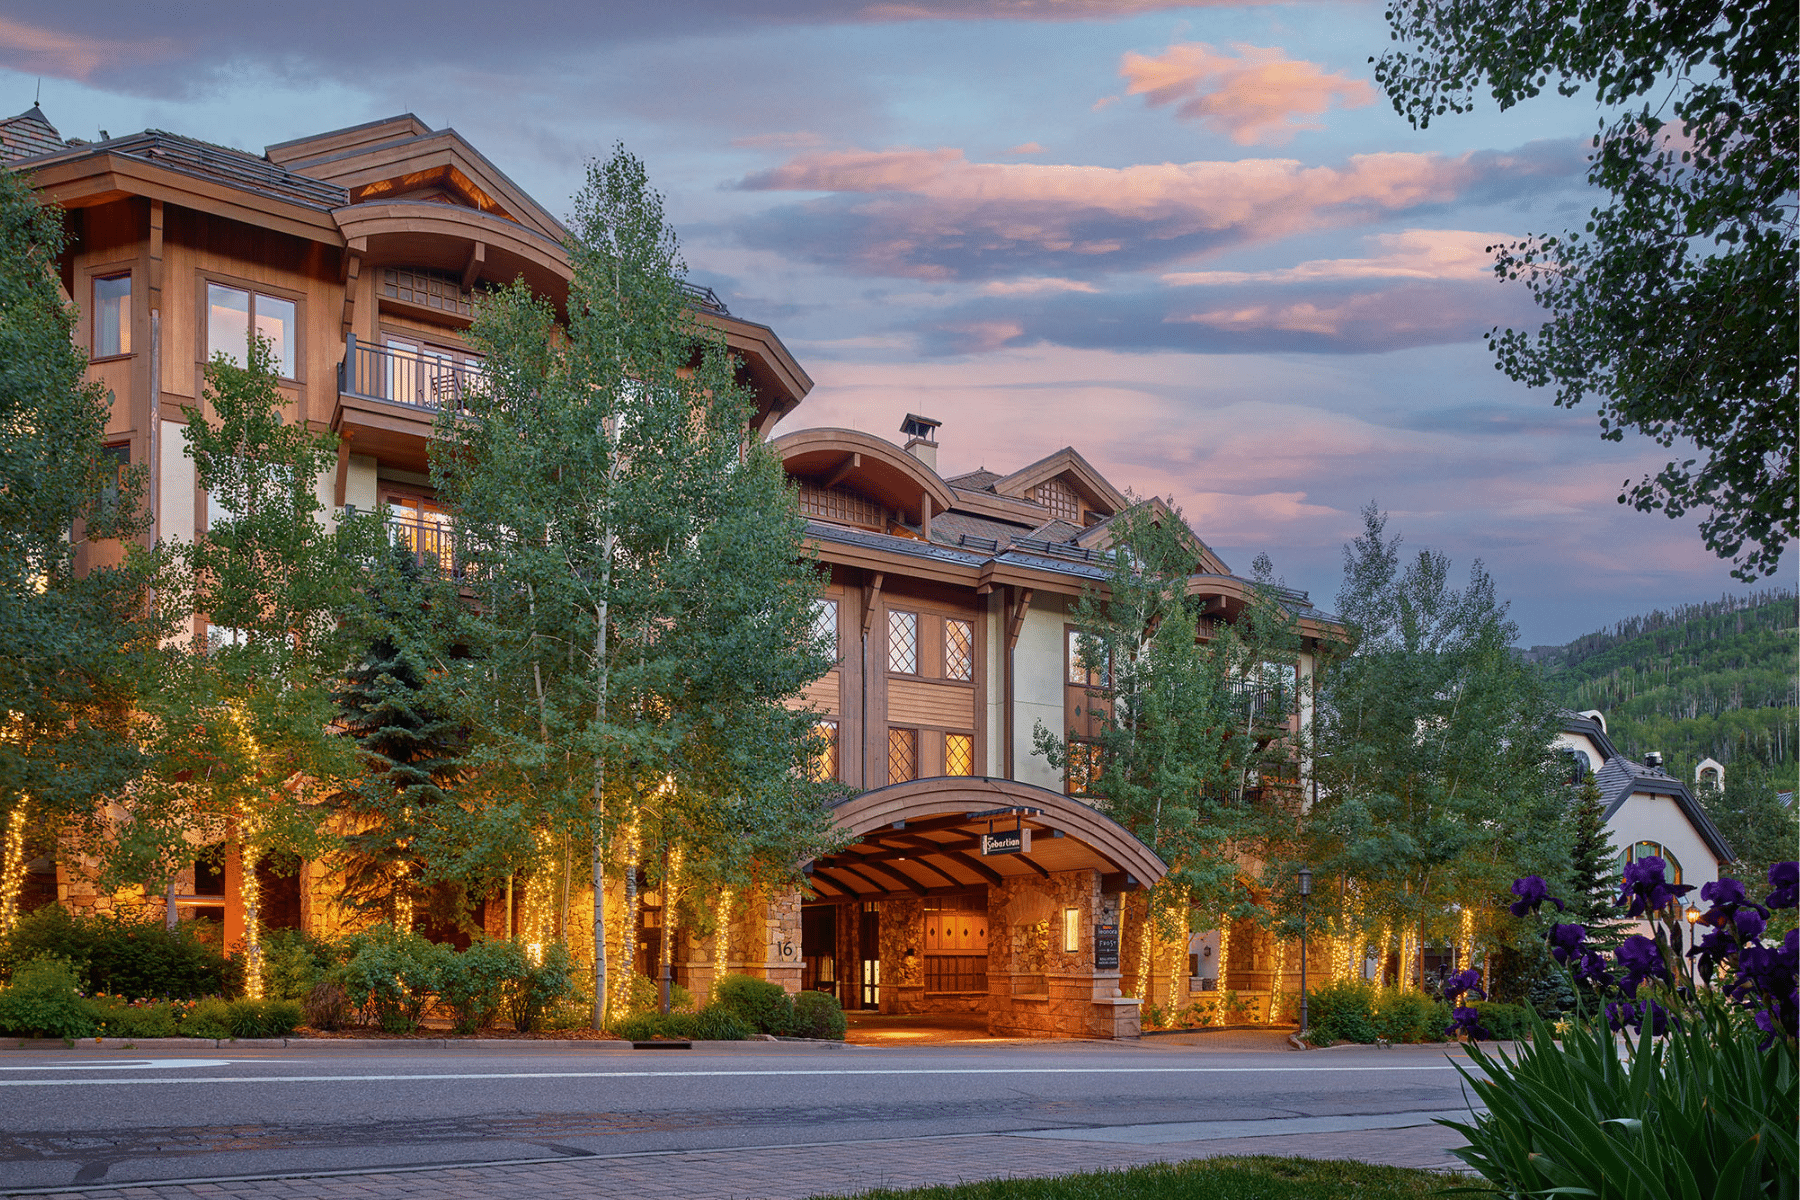 The Sebastian hotel in Vail, Colorado at sunset